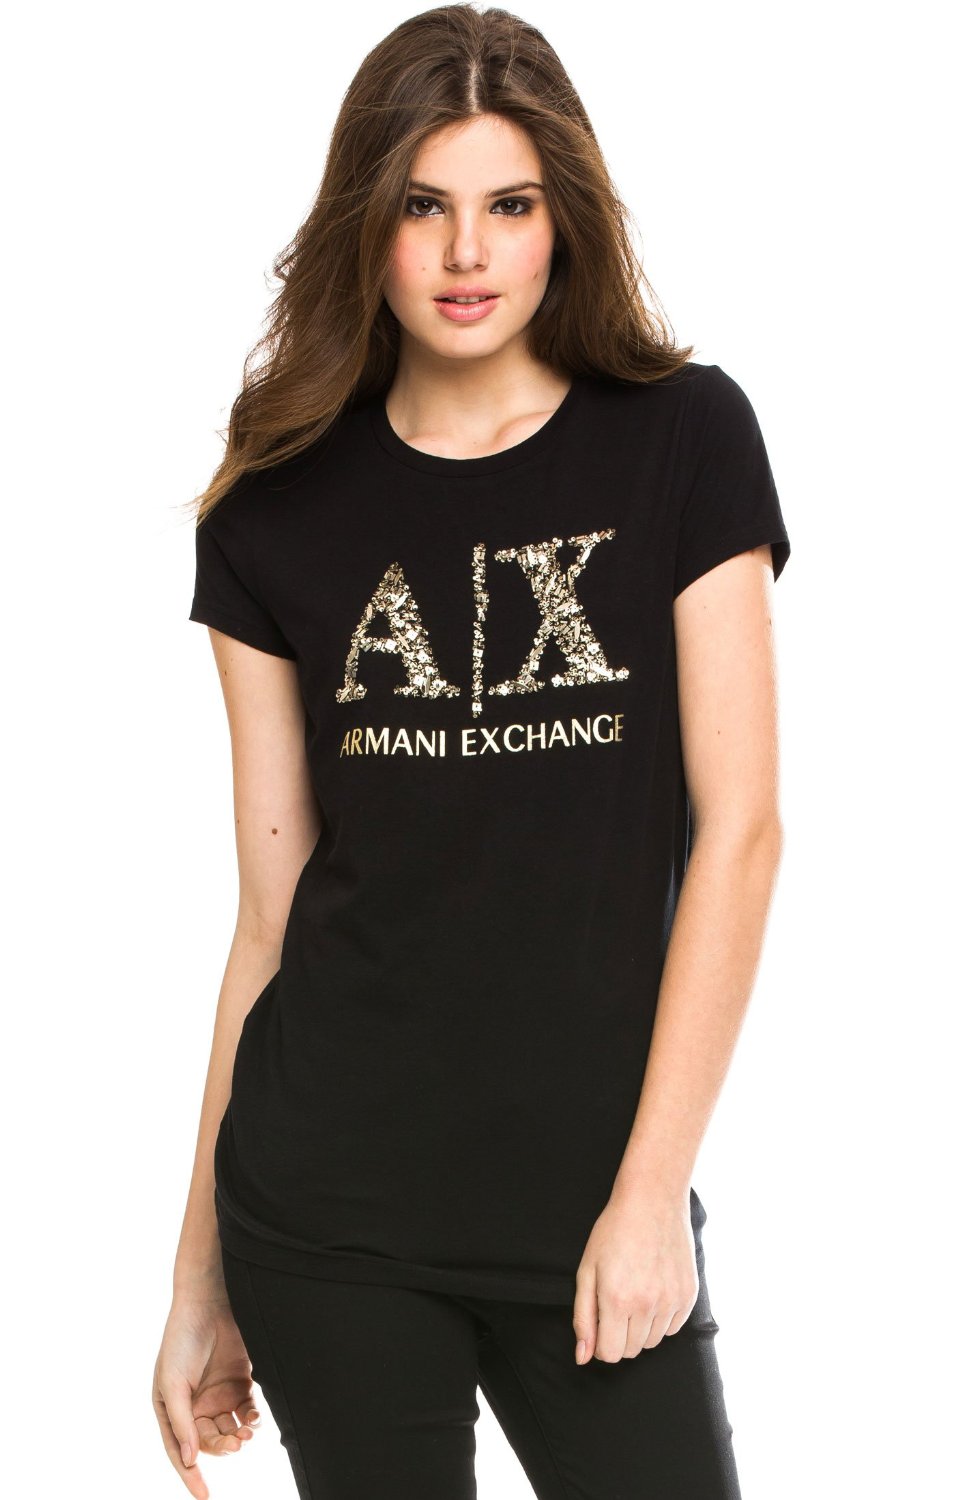 armani exchange shirts women's